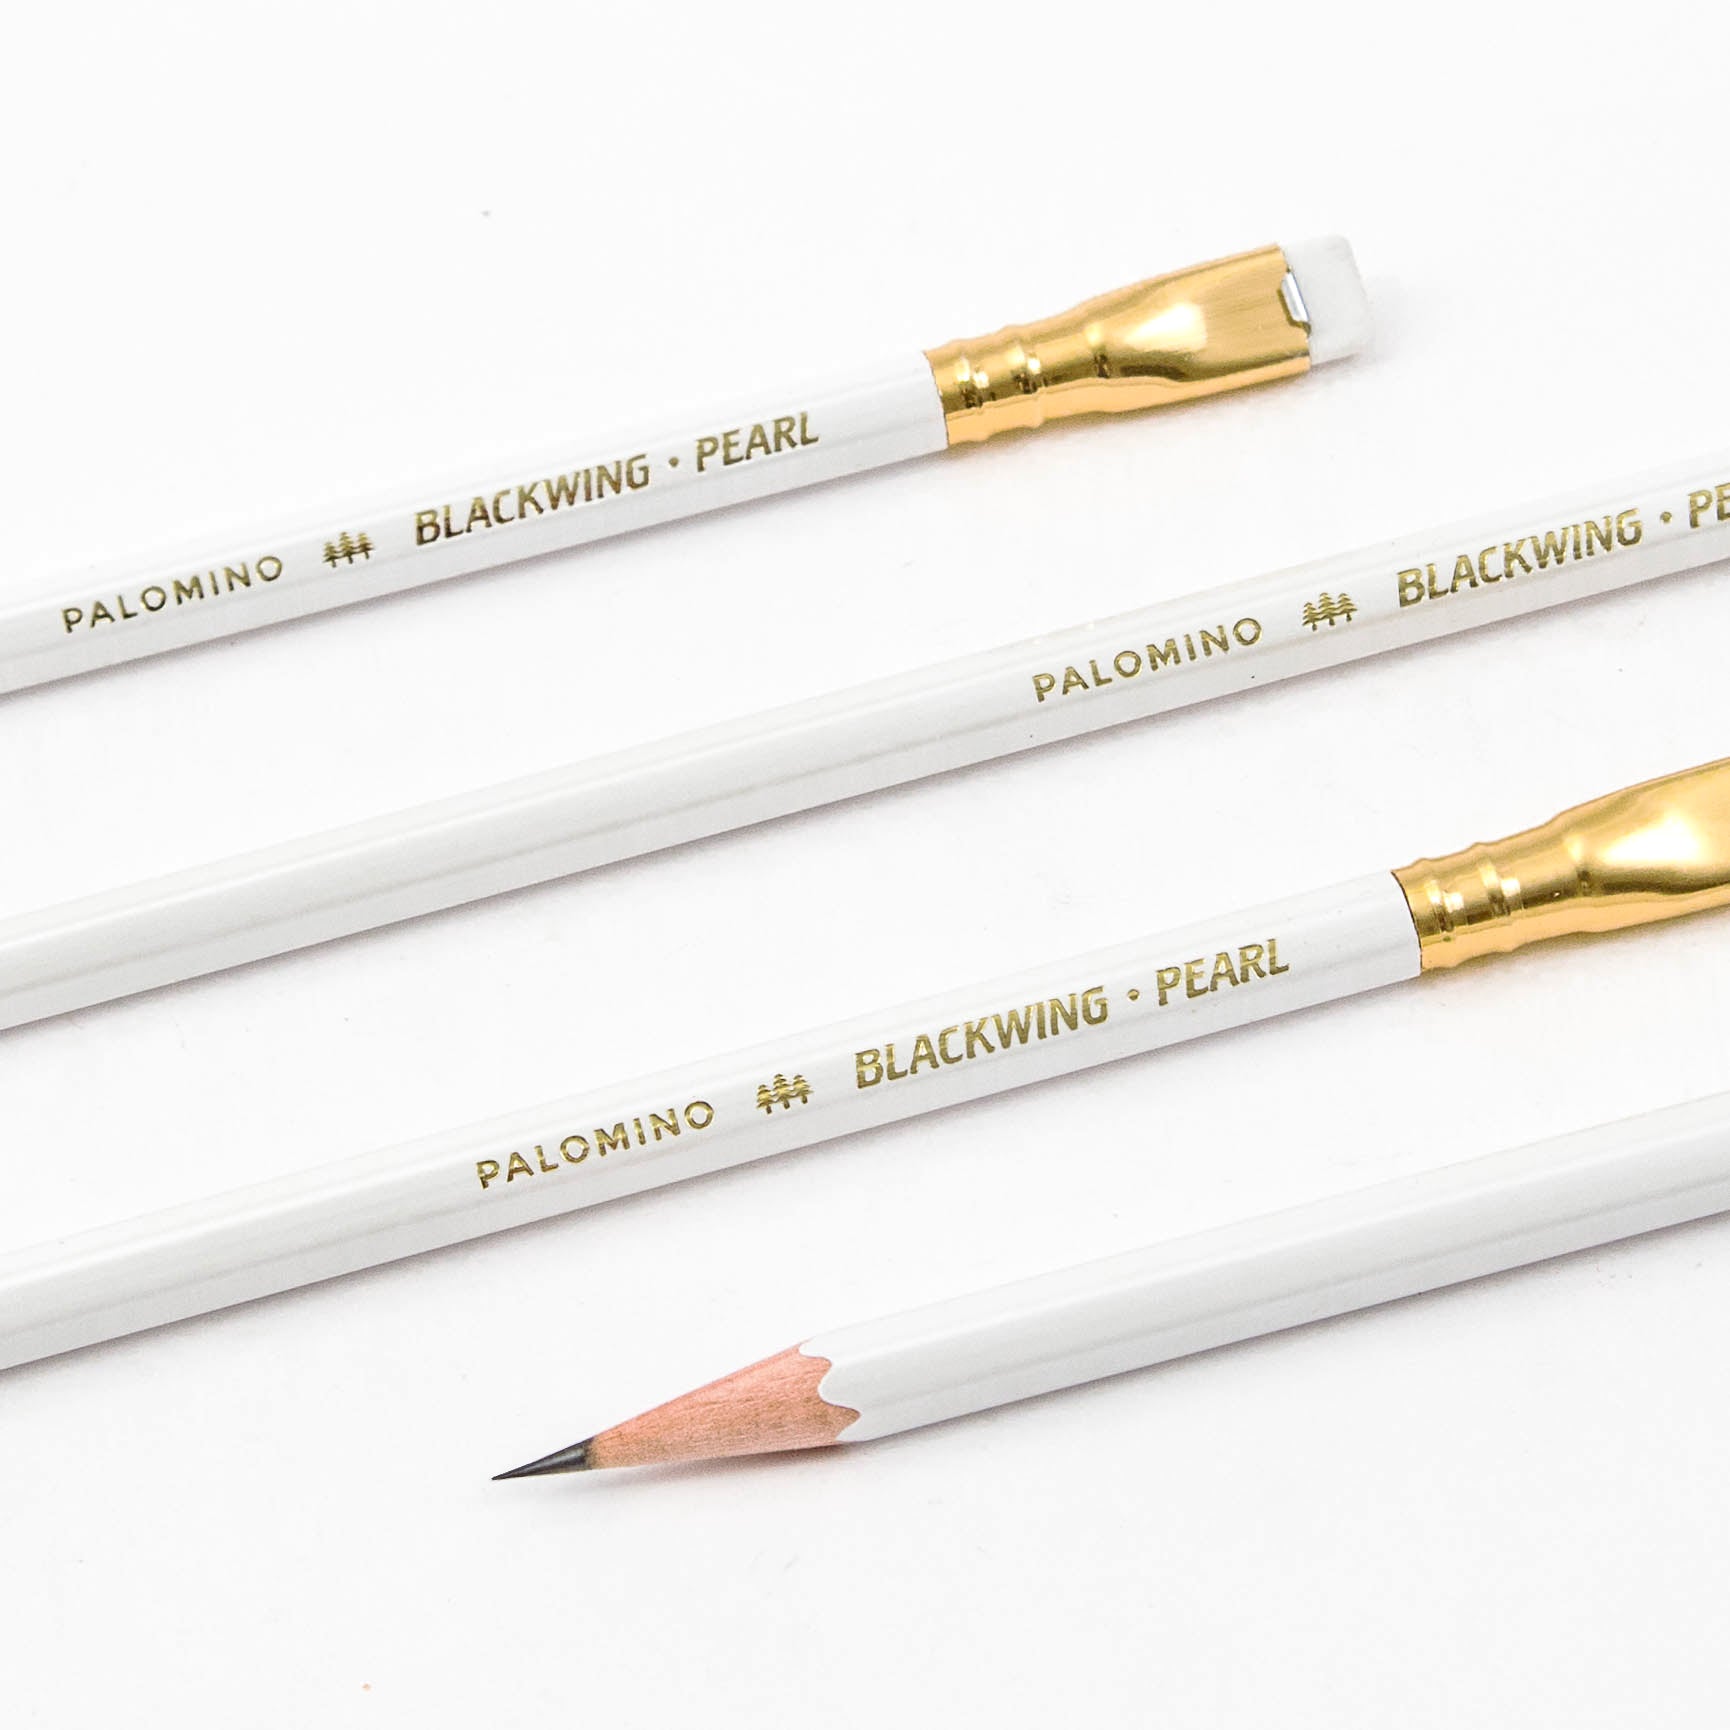 Box of 12 Blackwing Palomino Pearl | limited edition black-graphite pencil - Lifestory - Blackwing